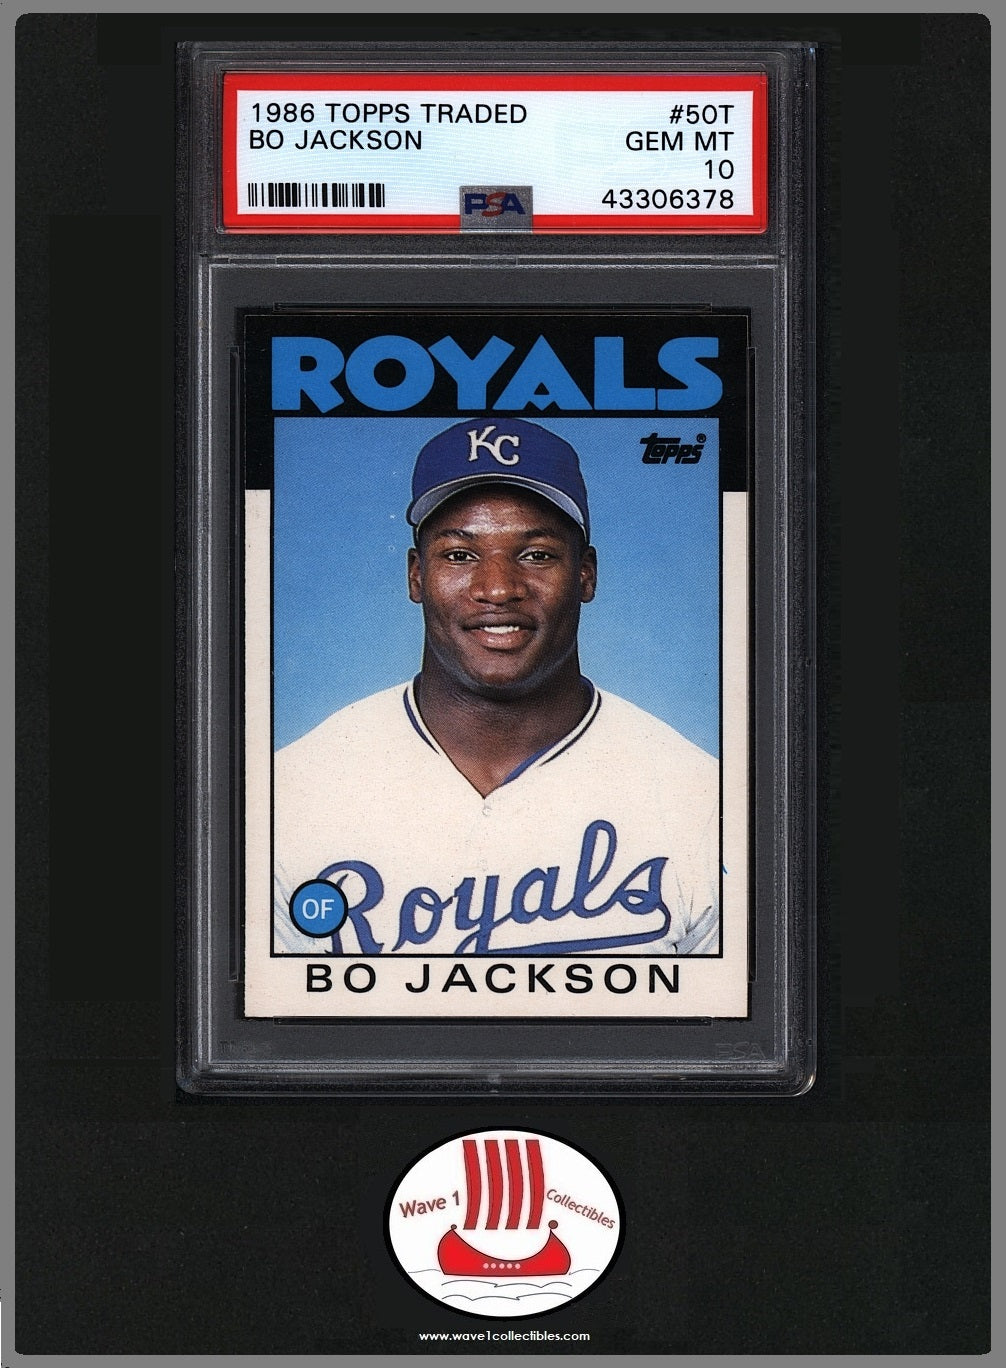 Bo Jackson Rookie Card | Topps Traded 1986 #50T Mint PSA 10